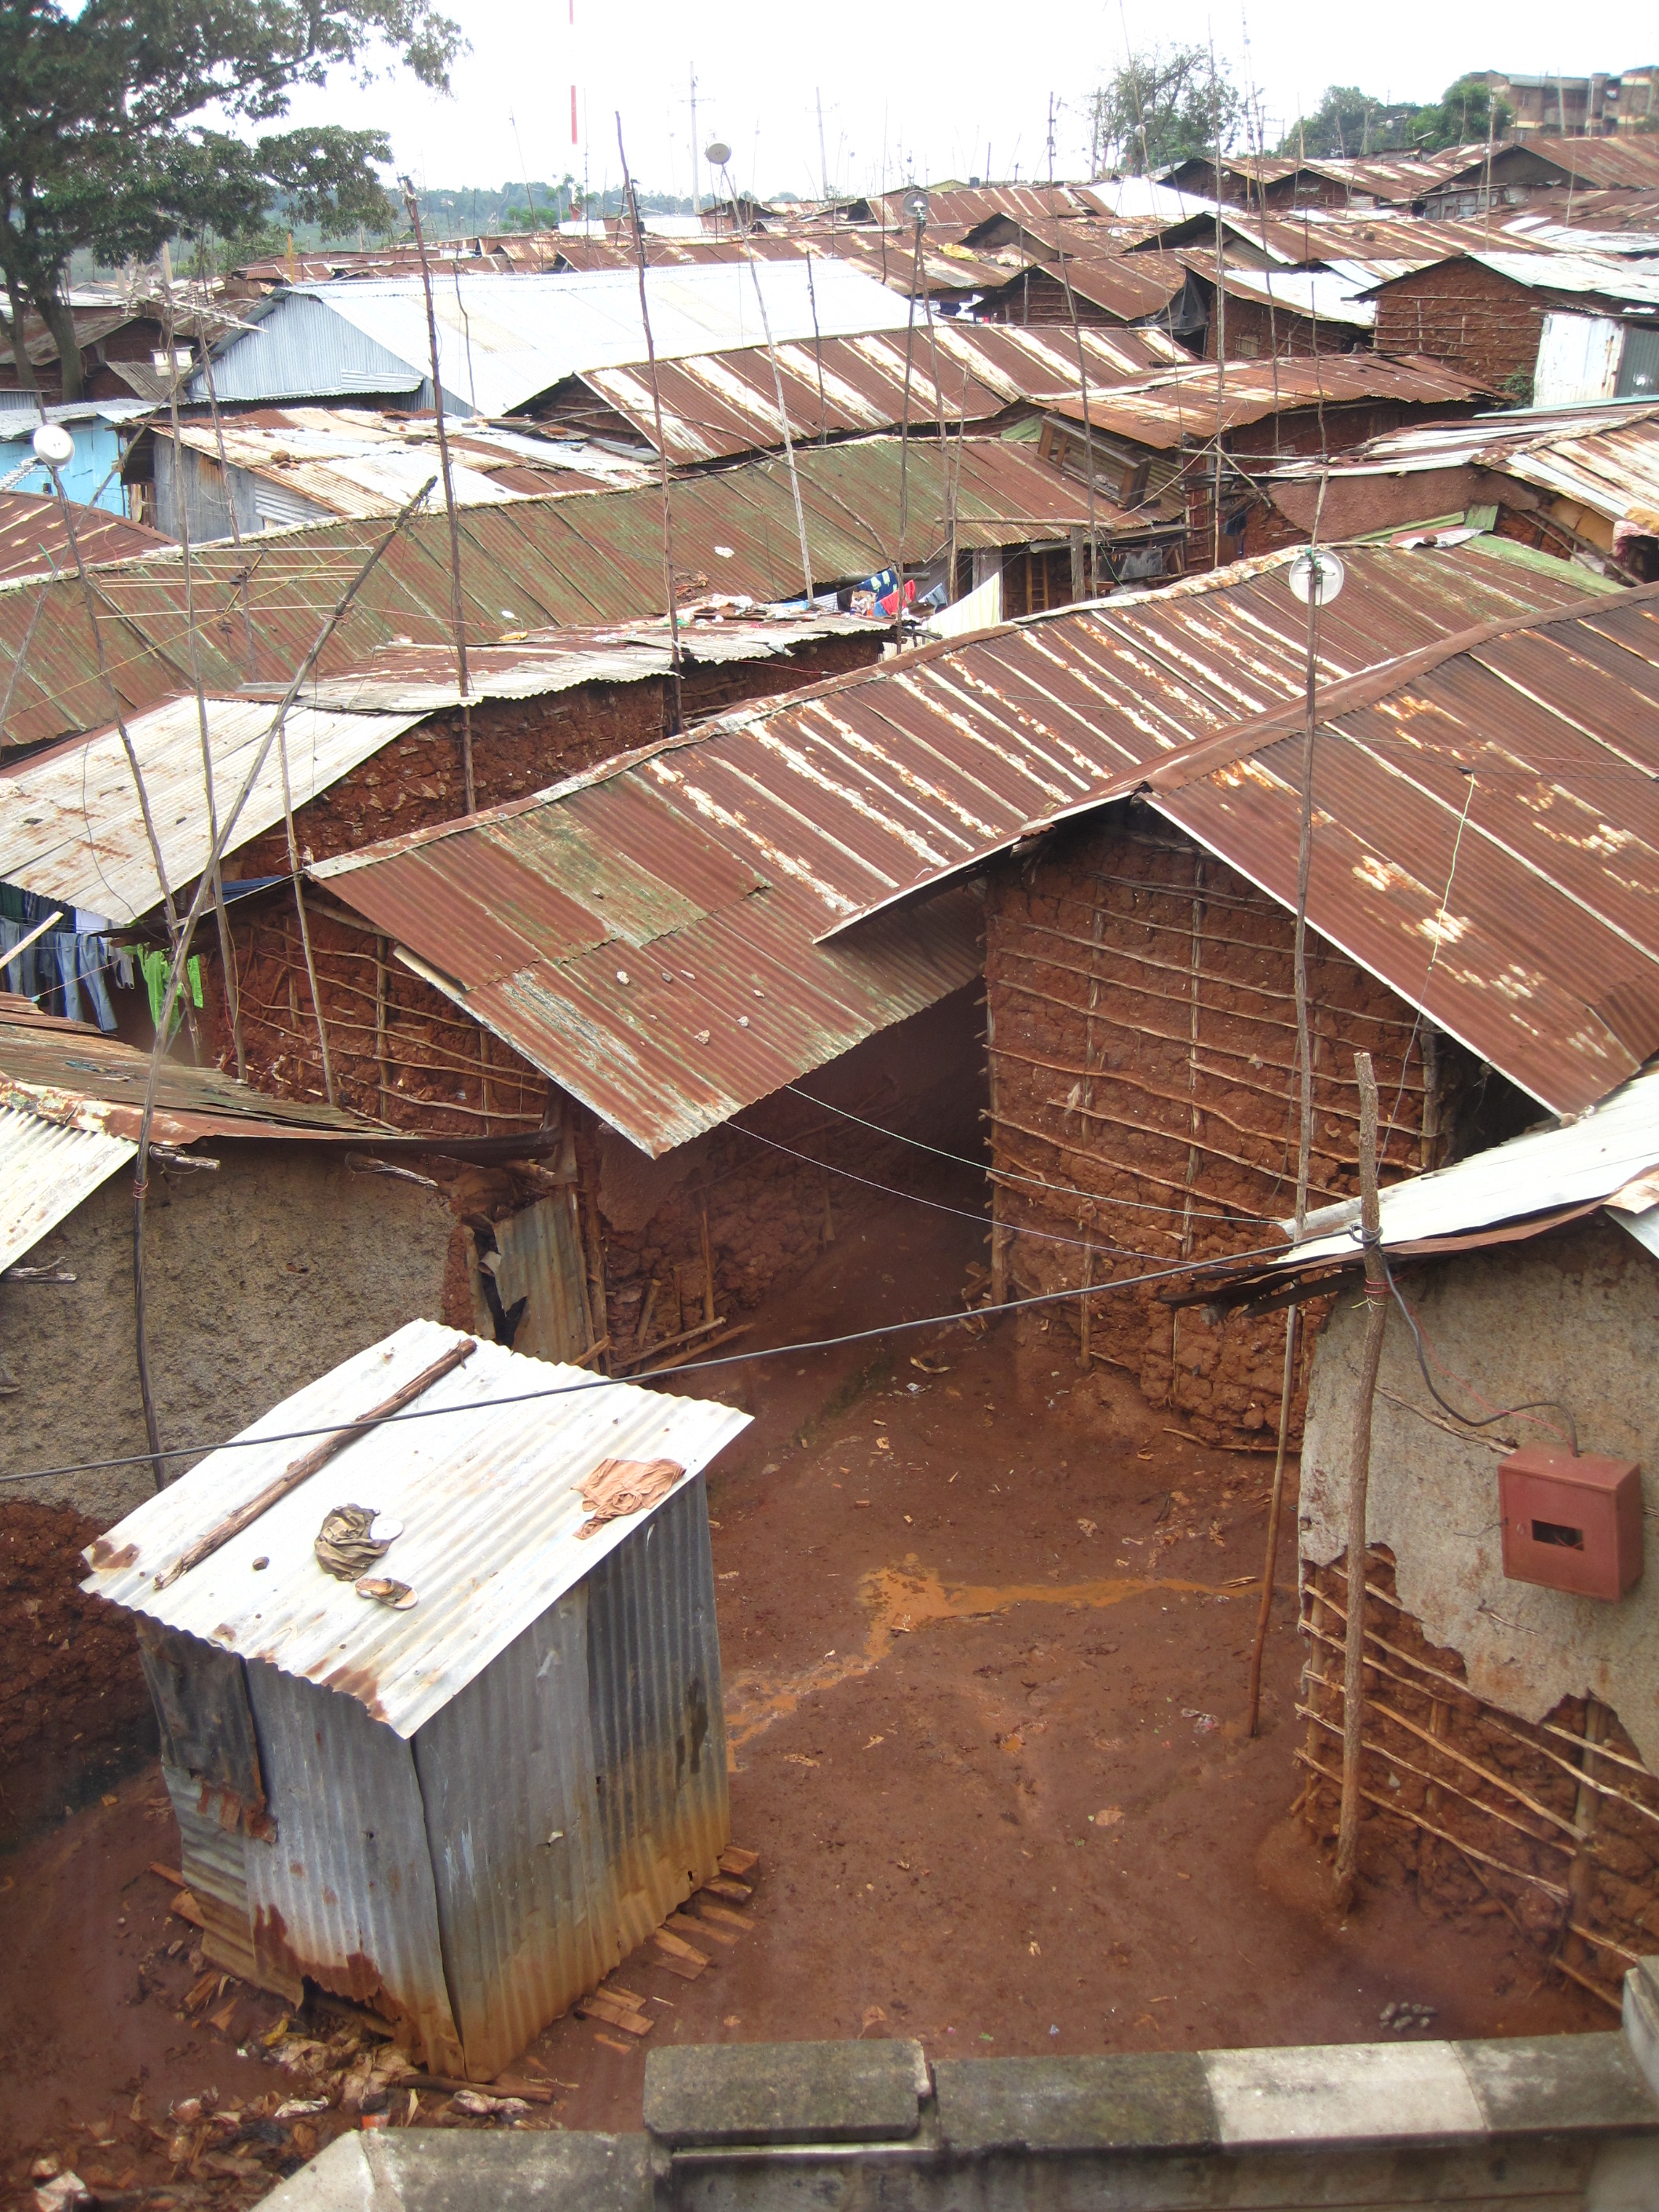 Site of malnutrition study in Kibera, Kenya